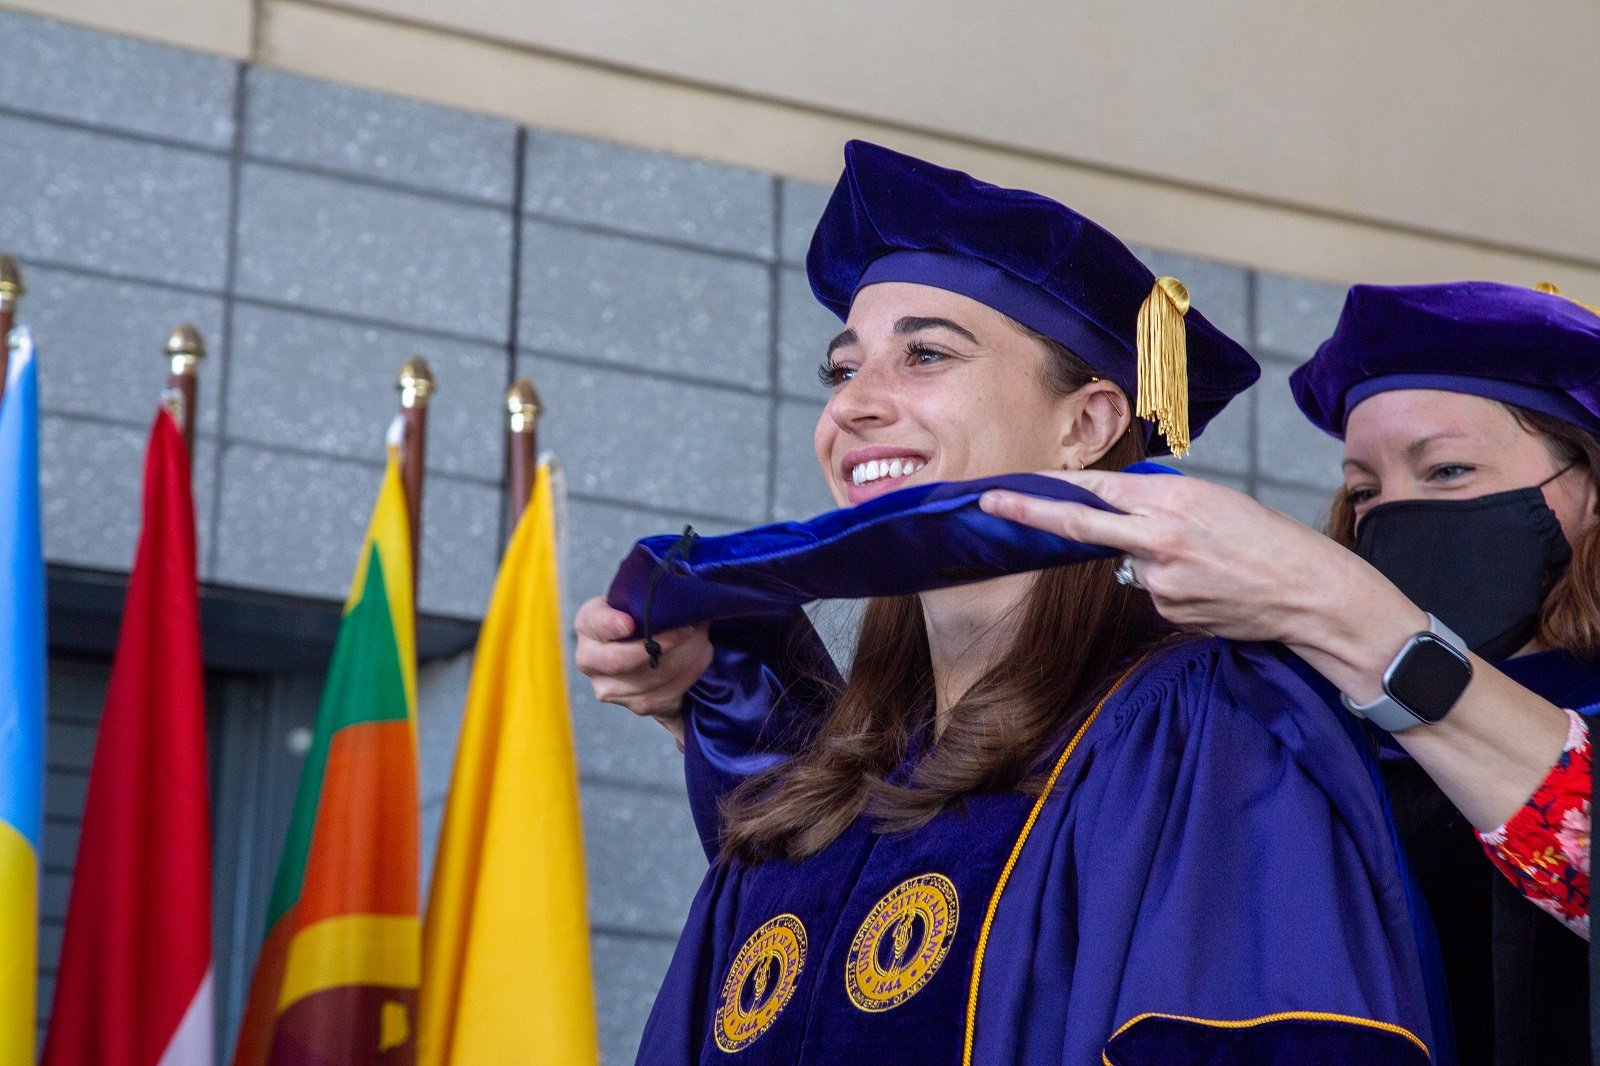 Photos from the Graduate Dane Graduation Experience